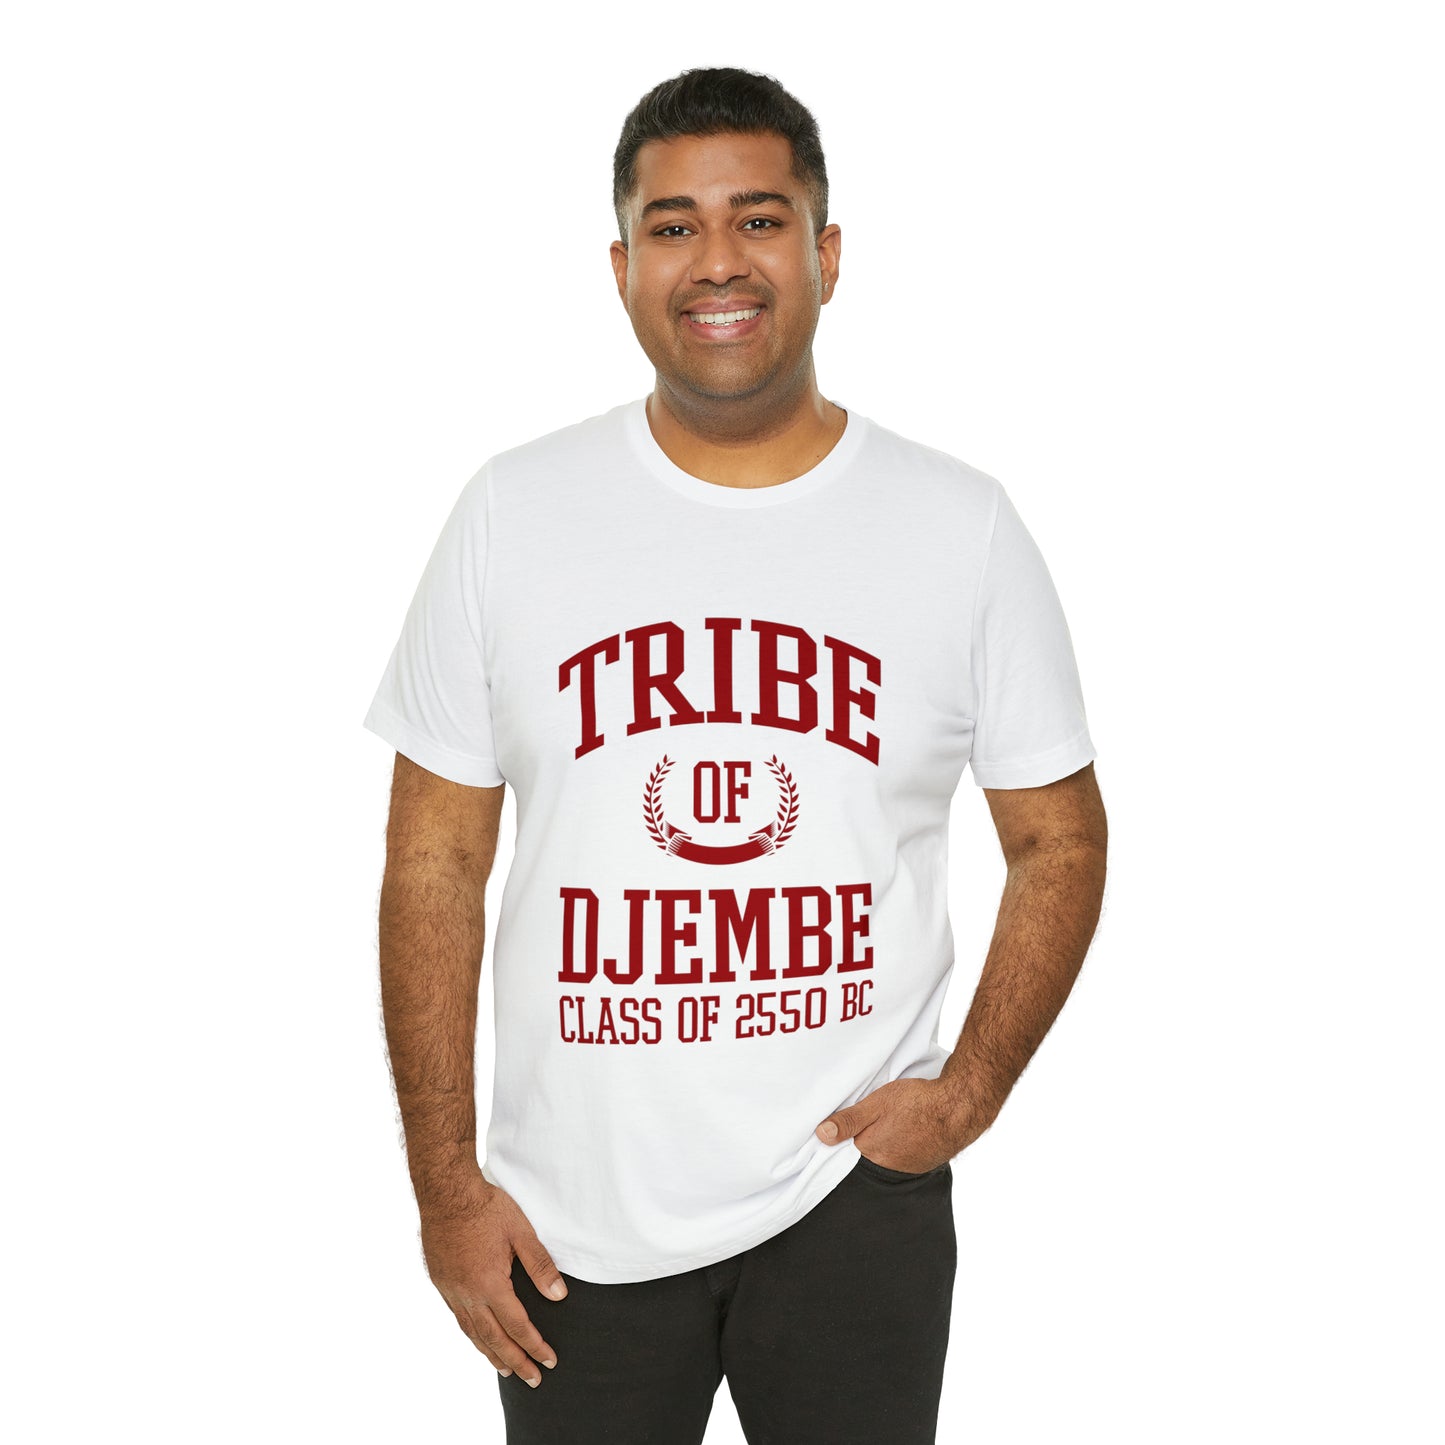 Tribe of Djembe Class of 2550 DC -Virgin White T-Shirt